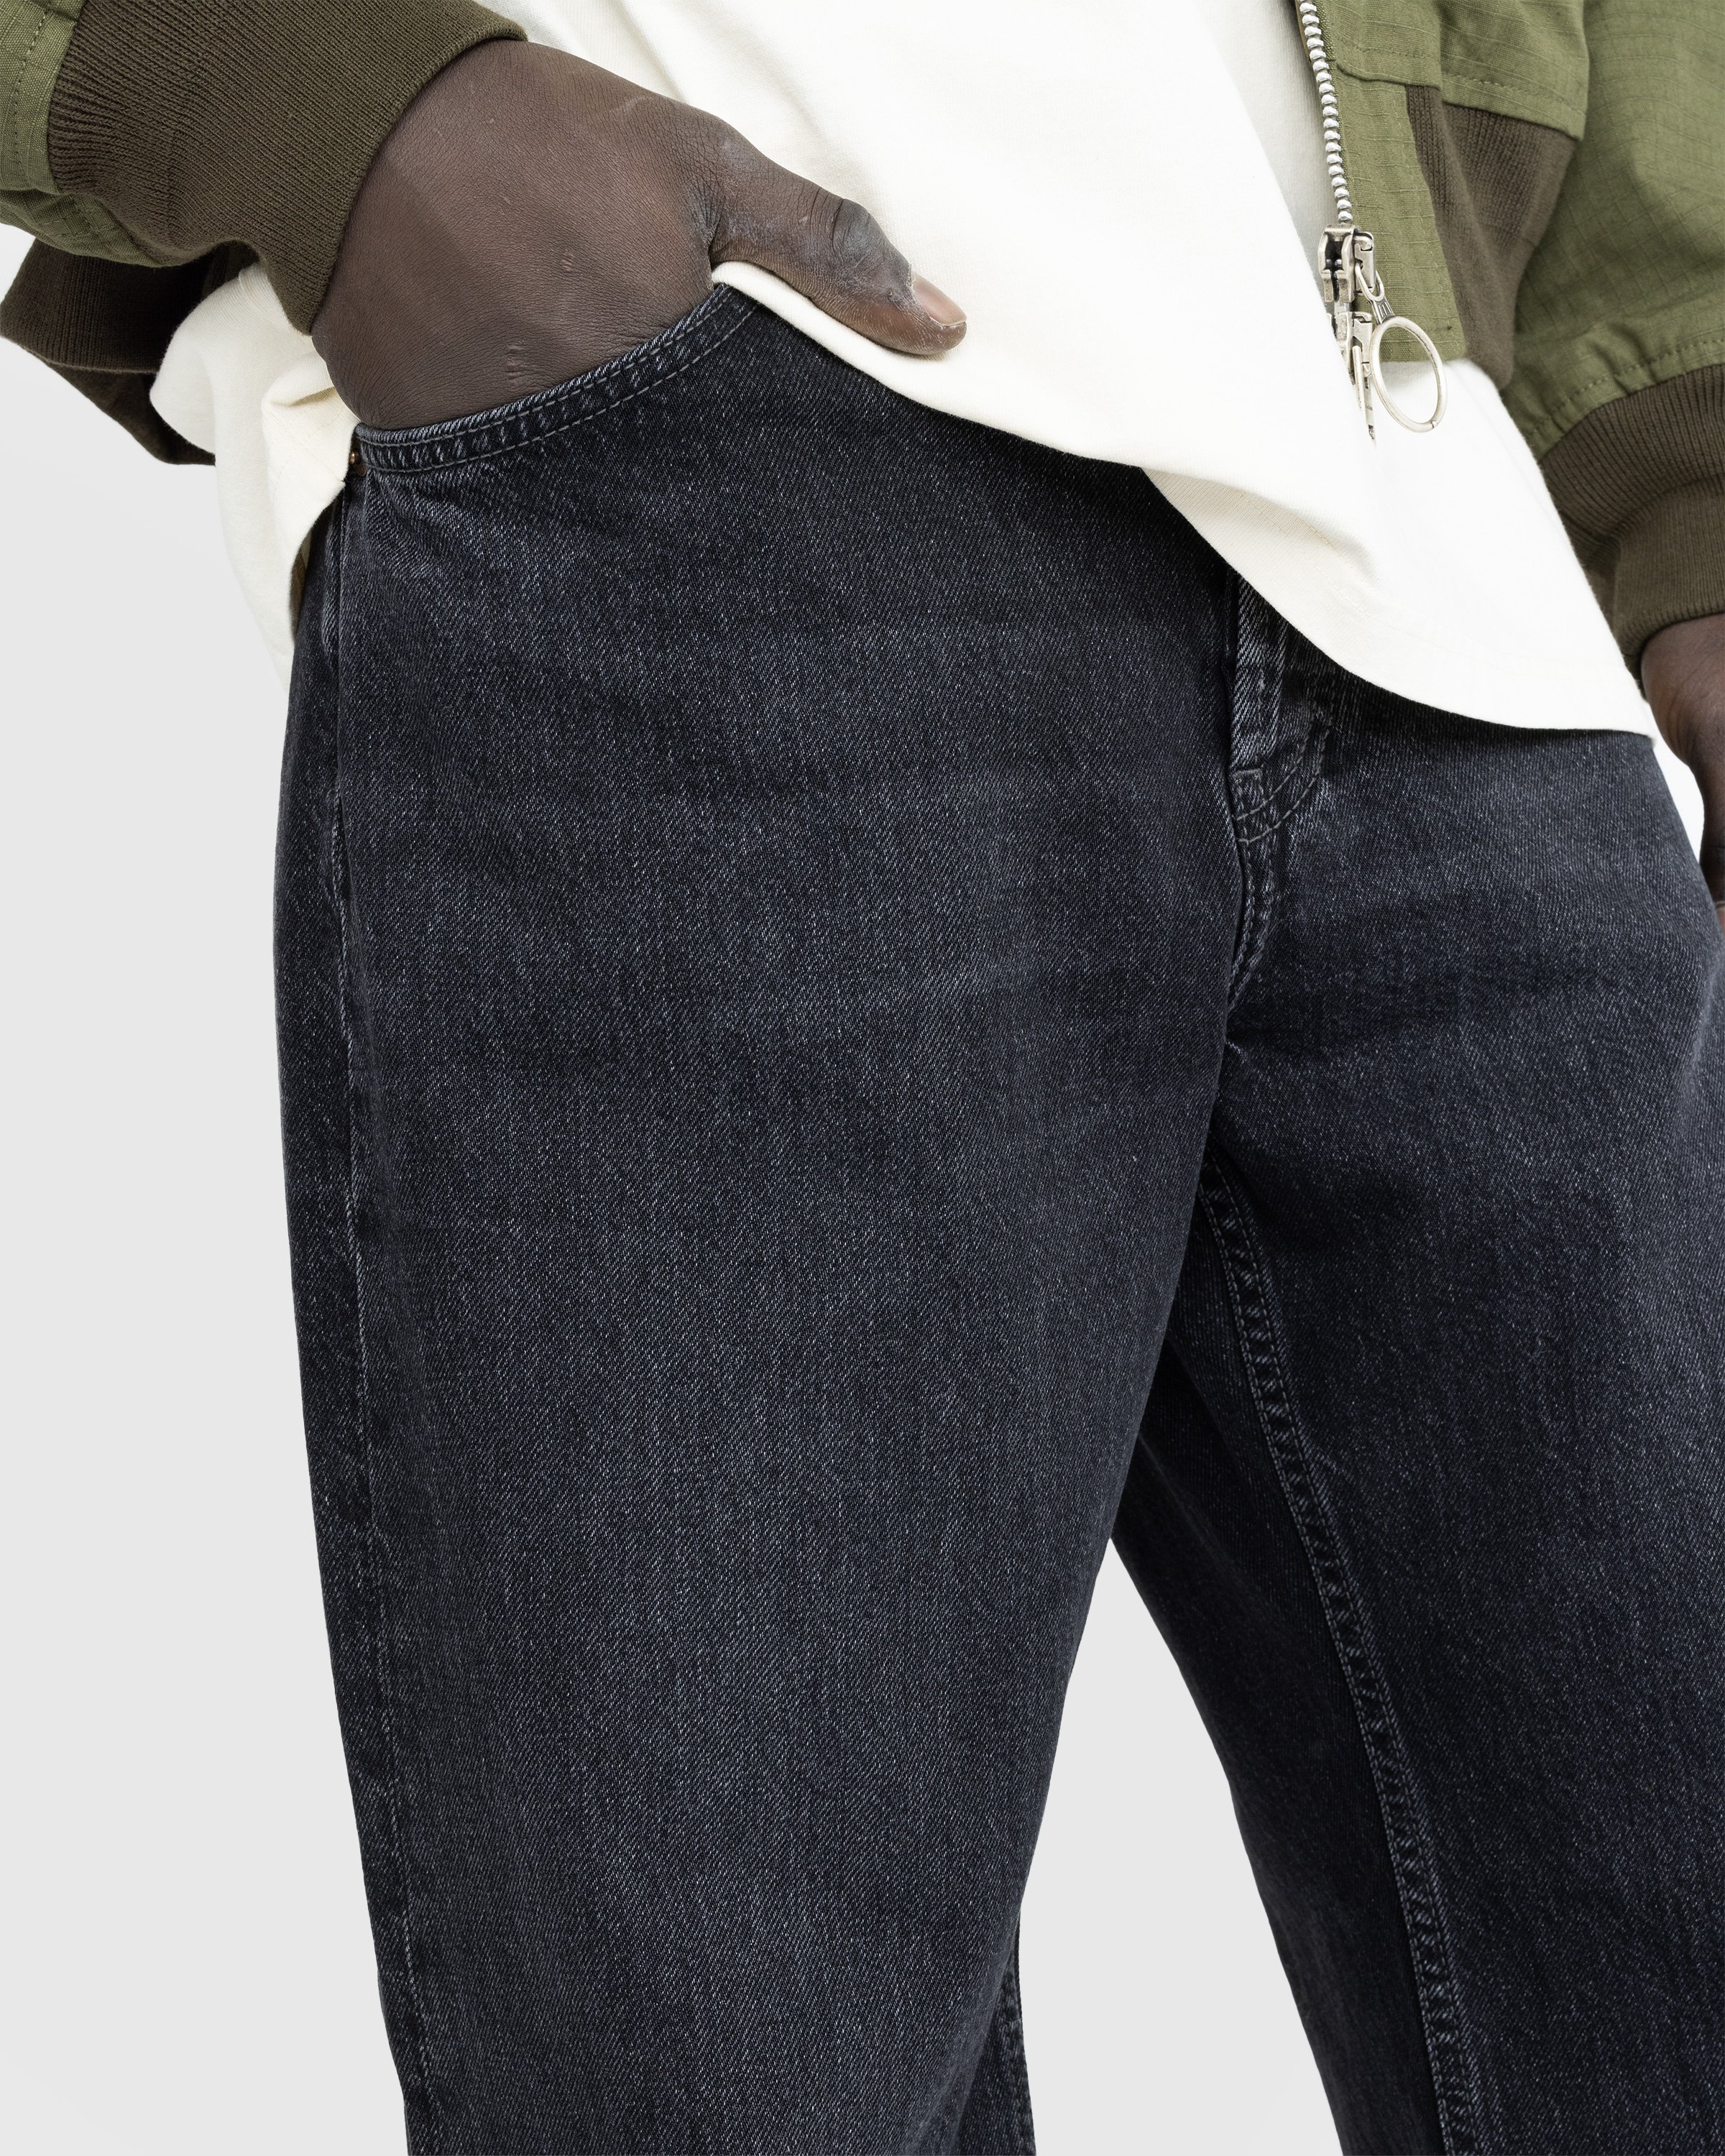 Acne Studios - Loose Fit Jeans 2021 Vintage Black - Clothing - Black - Image 5